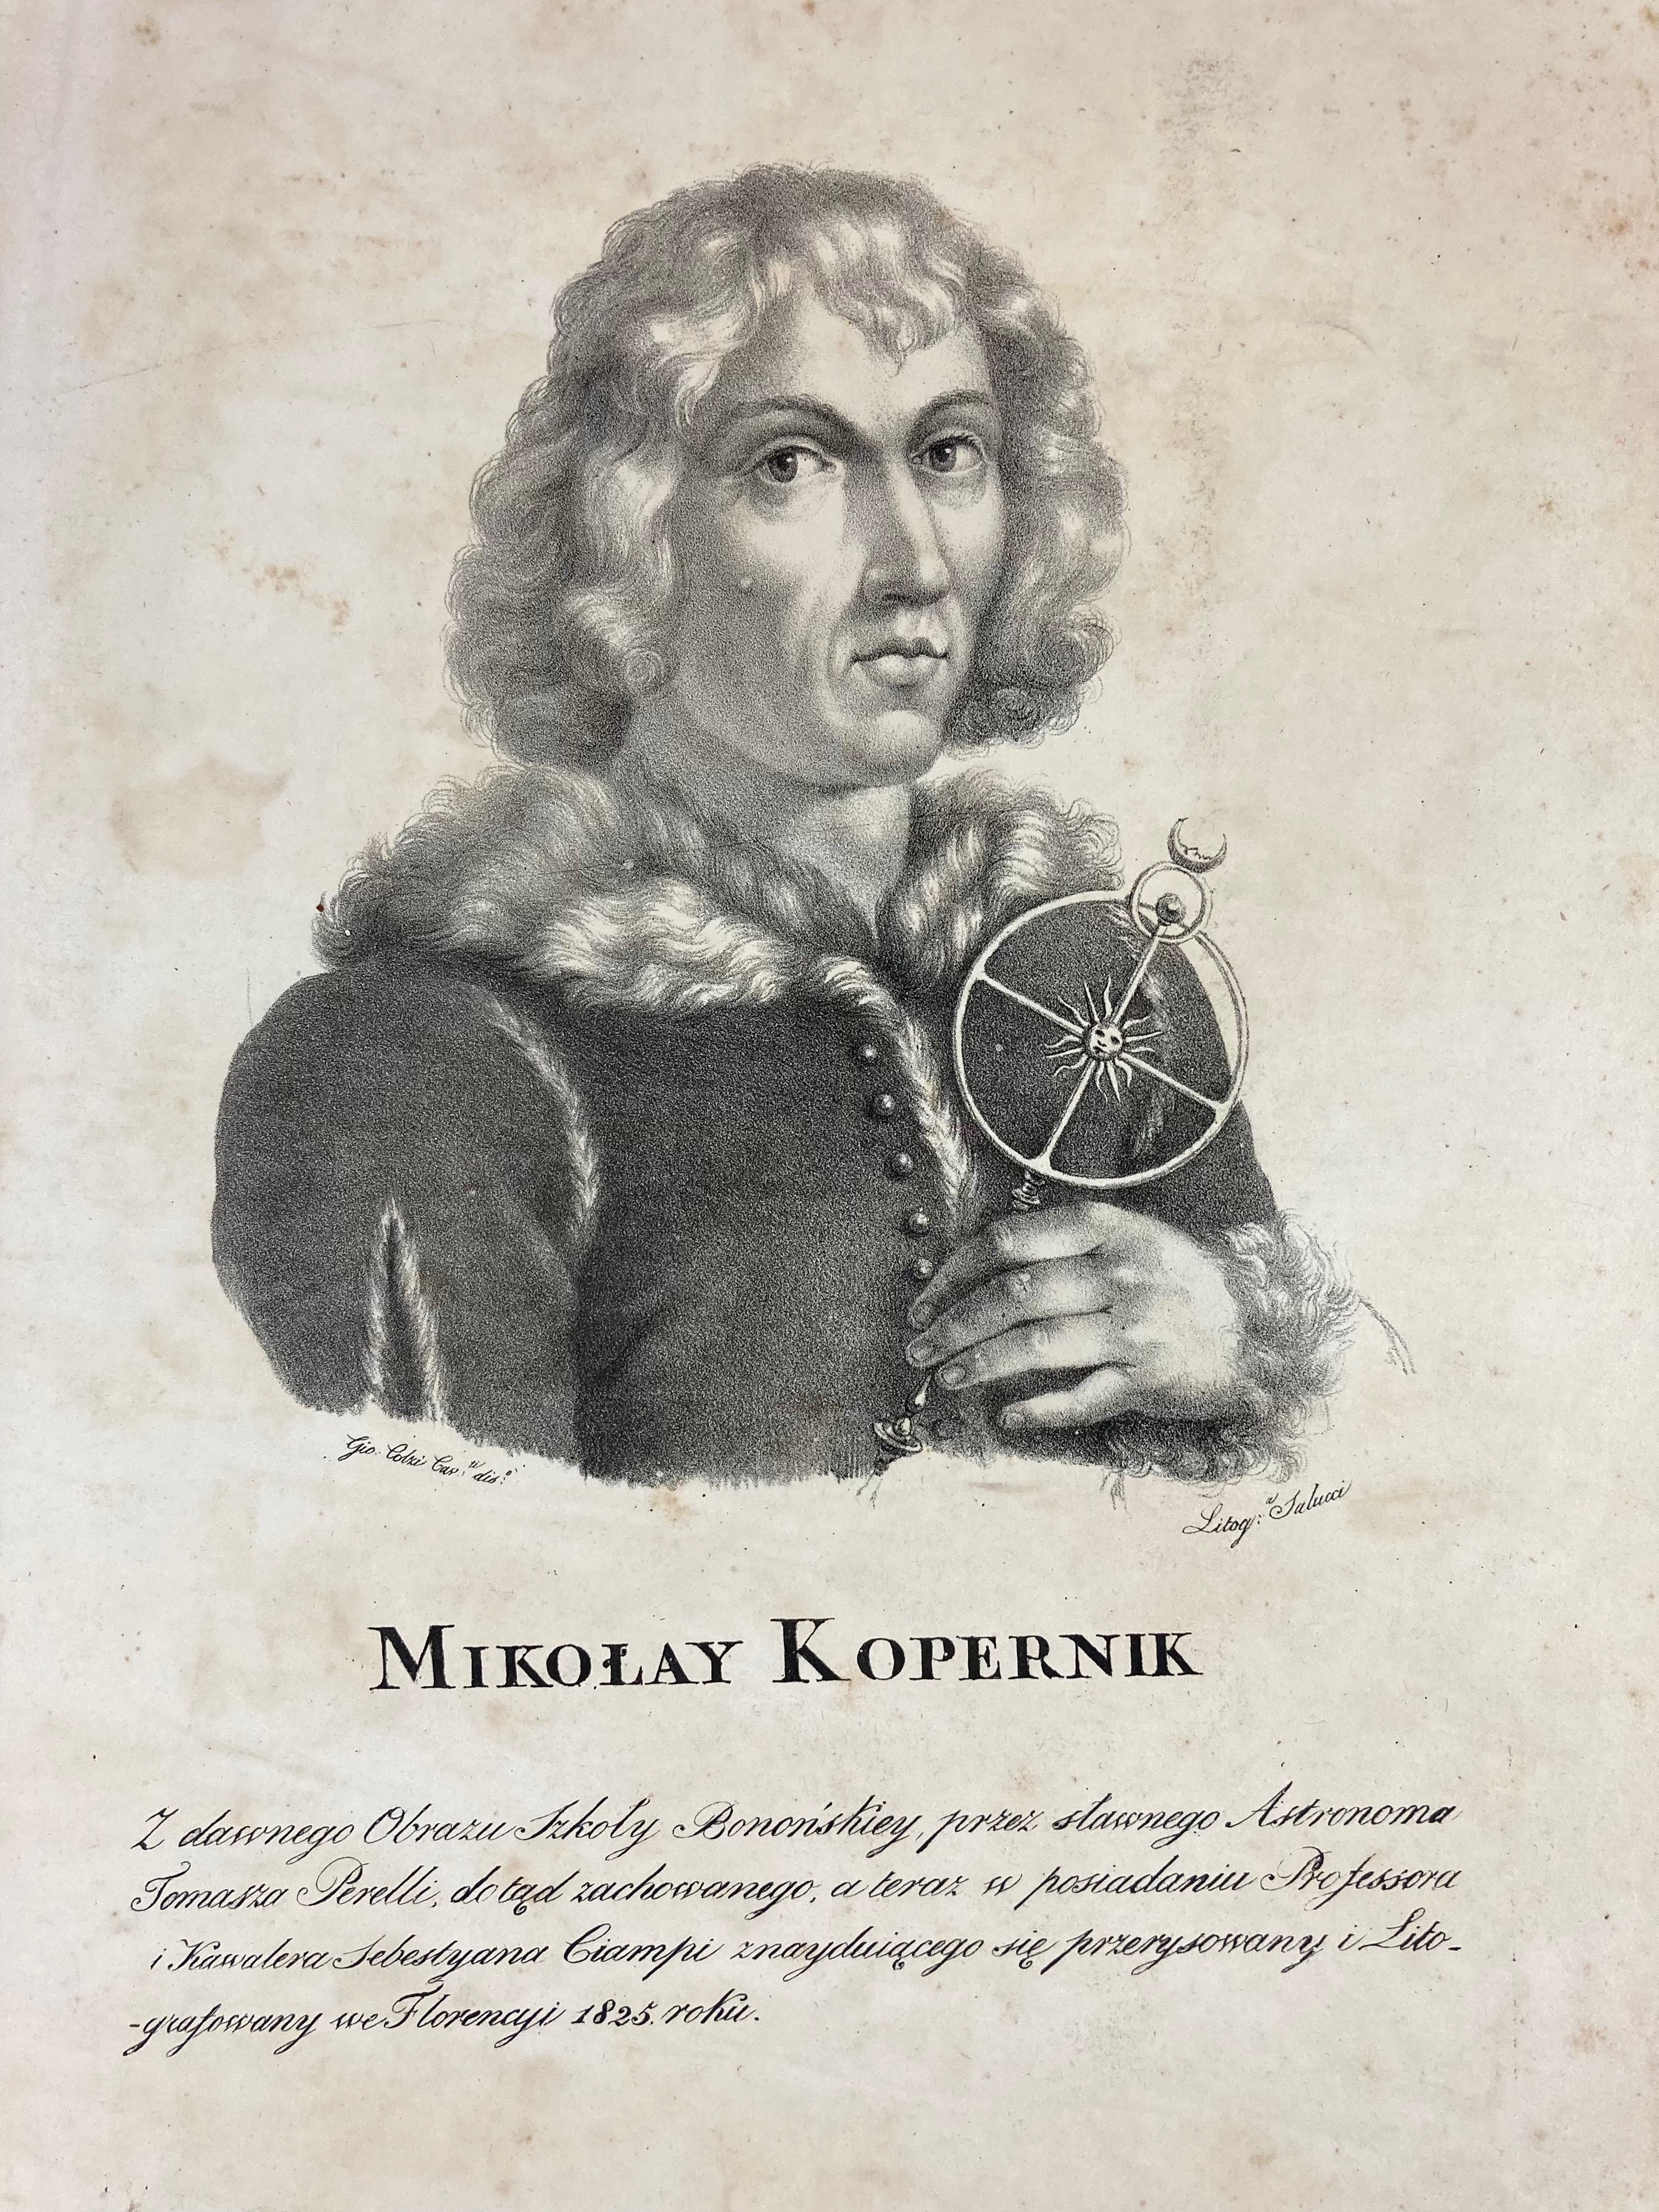 EASTERN EUROPE -- POLAND -- "MIKOLAY KOPERNIK". 1825. Plain lithogr. portr. of Copernicus by